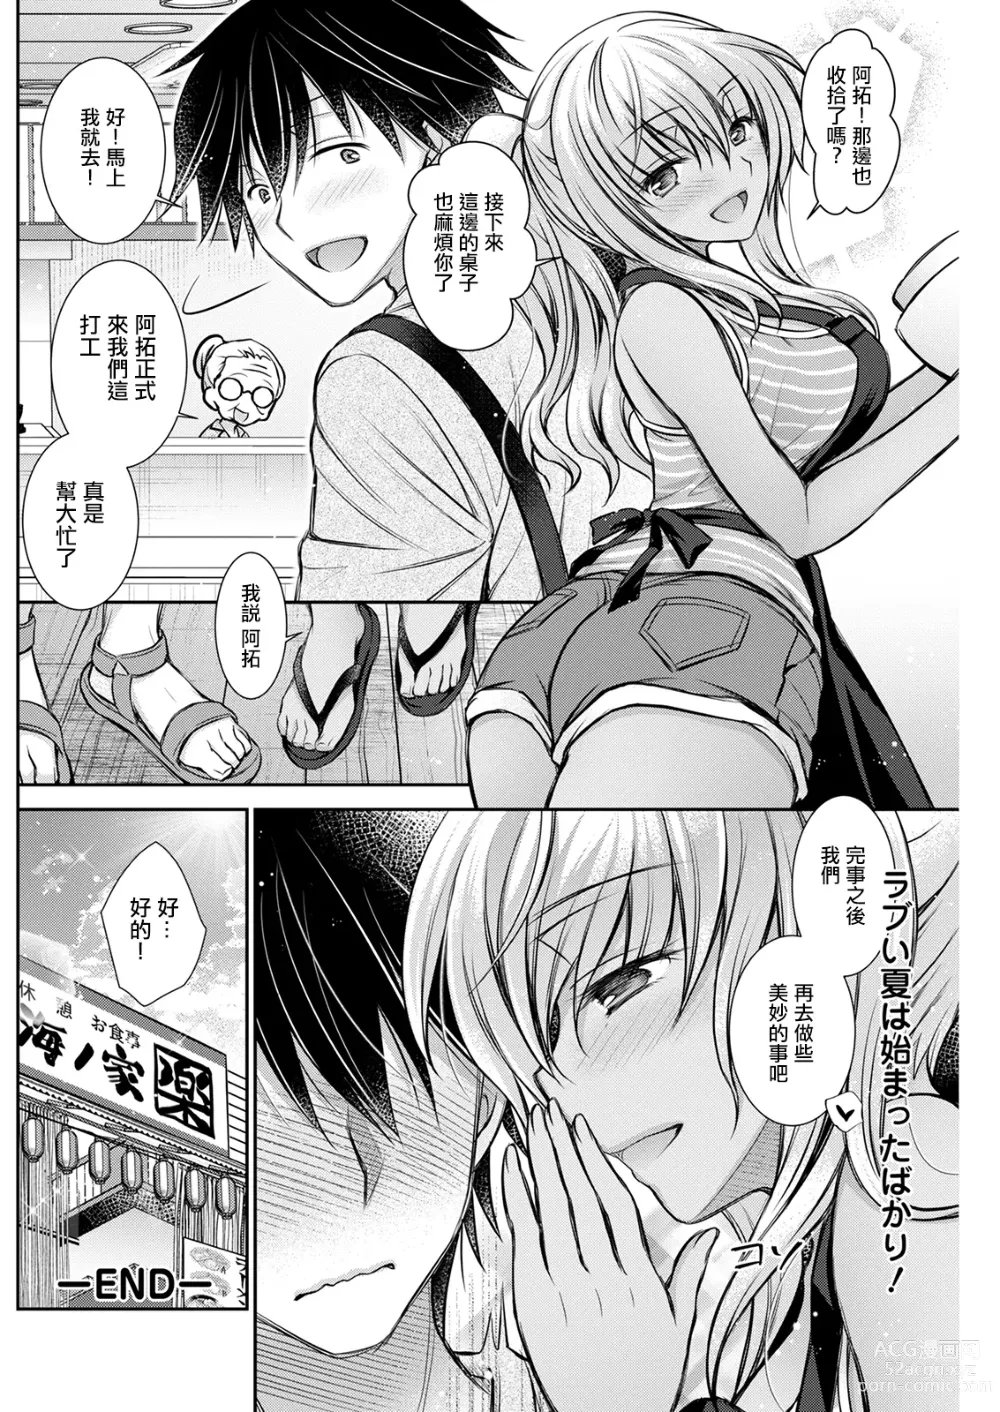 Page 18 of manga Umi no Yeah!!